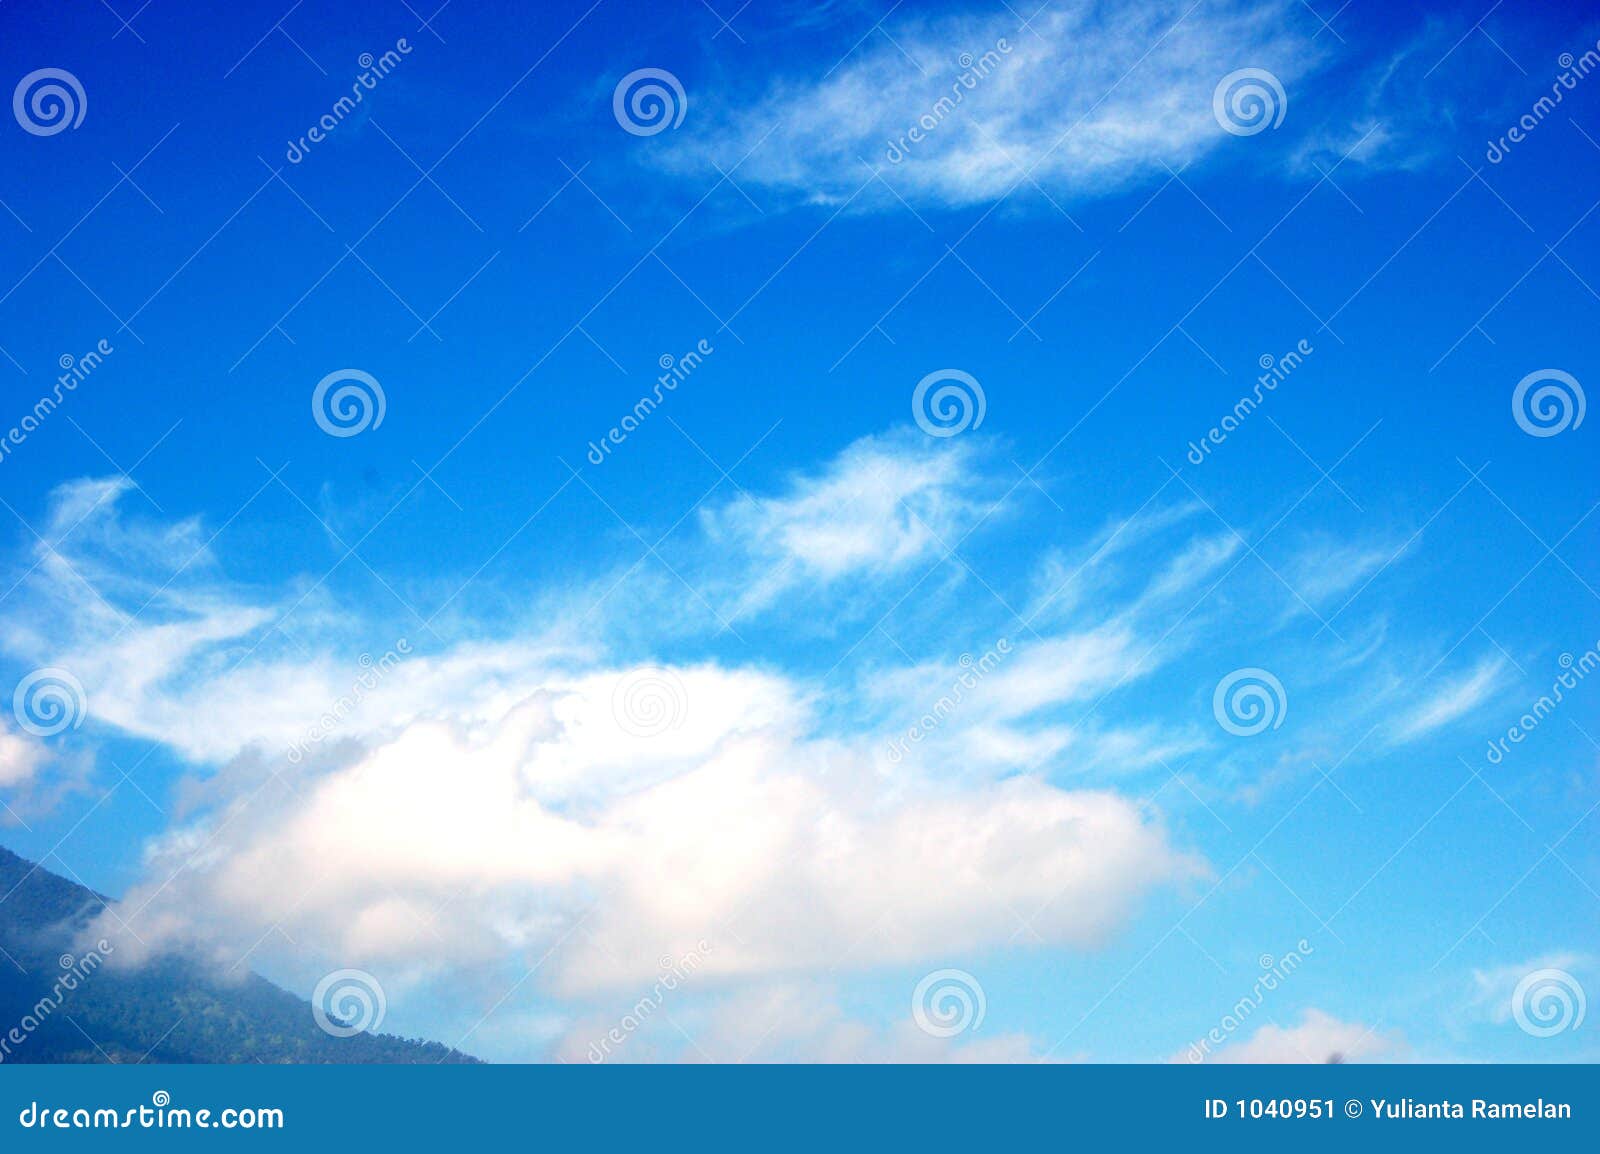 A Bright Blue Sky Stock Image - Image: 1040951